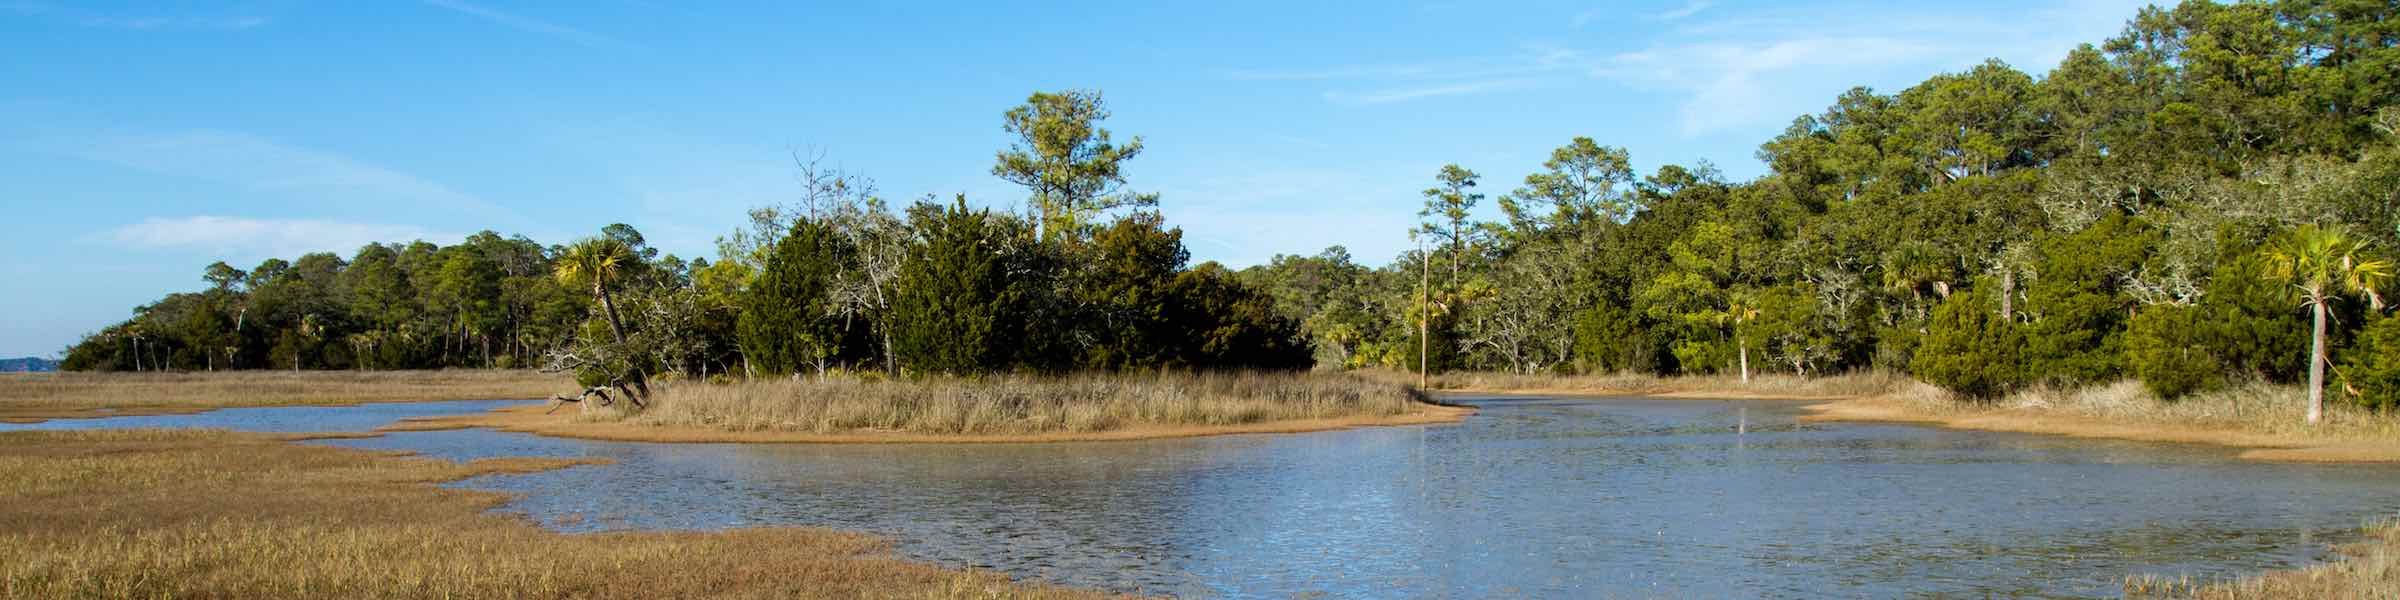 Trees and marsh at Pinckney Island National Wildlife Refuge, South Carolina.